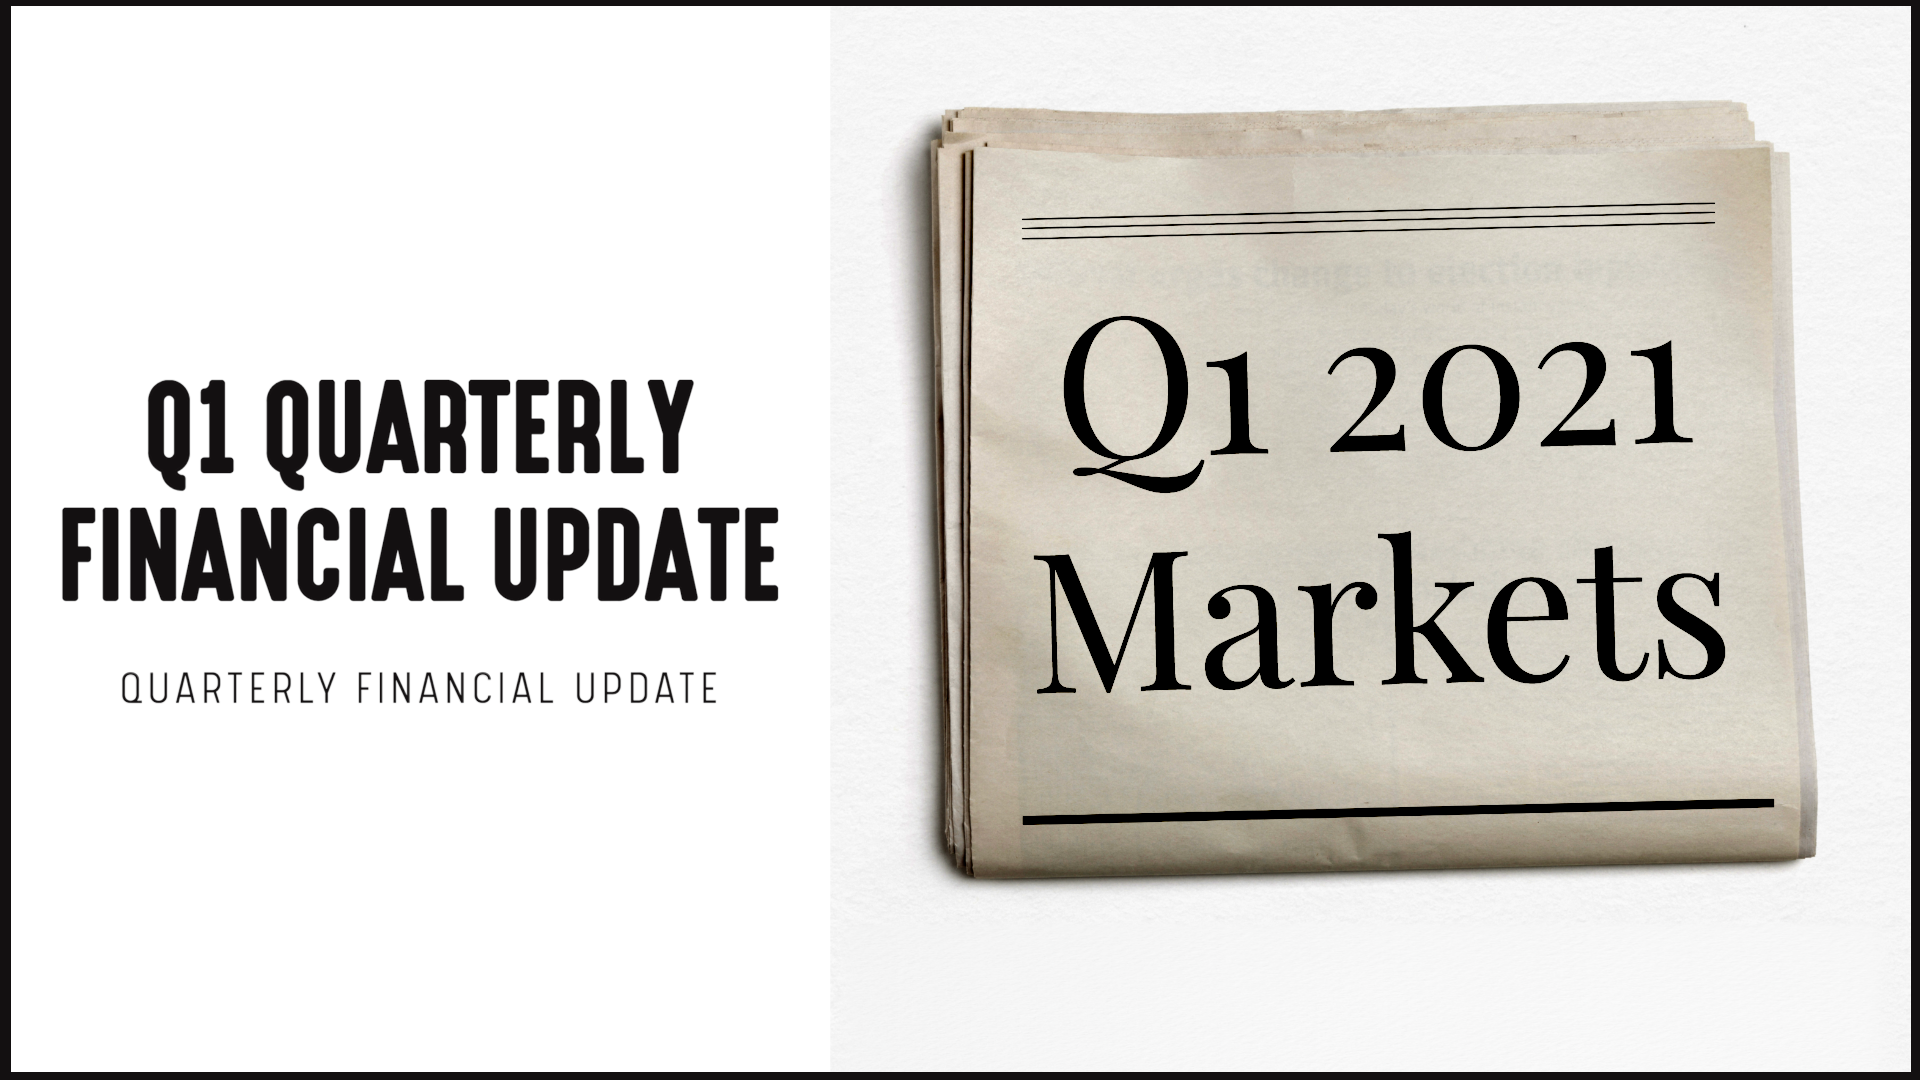 [NEW] Market Update Campaign | Q1 2021 Financial Dashboard